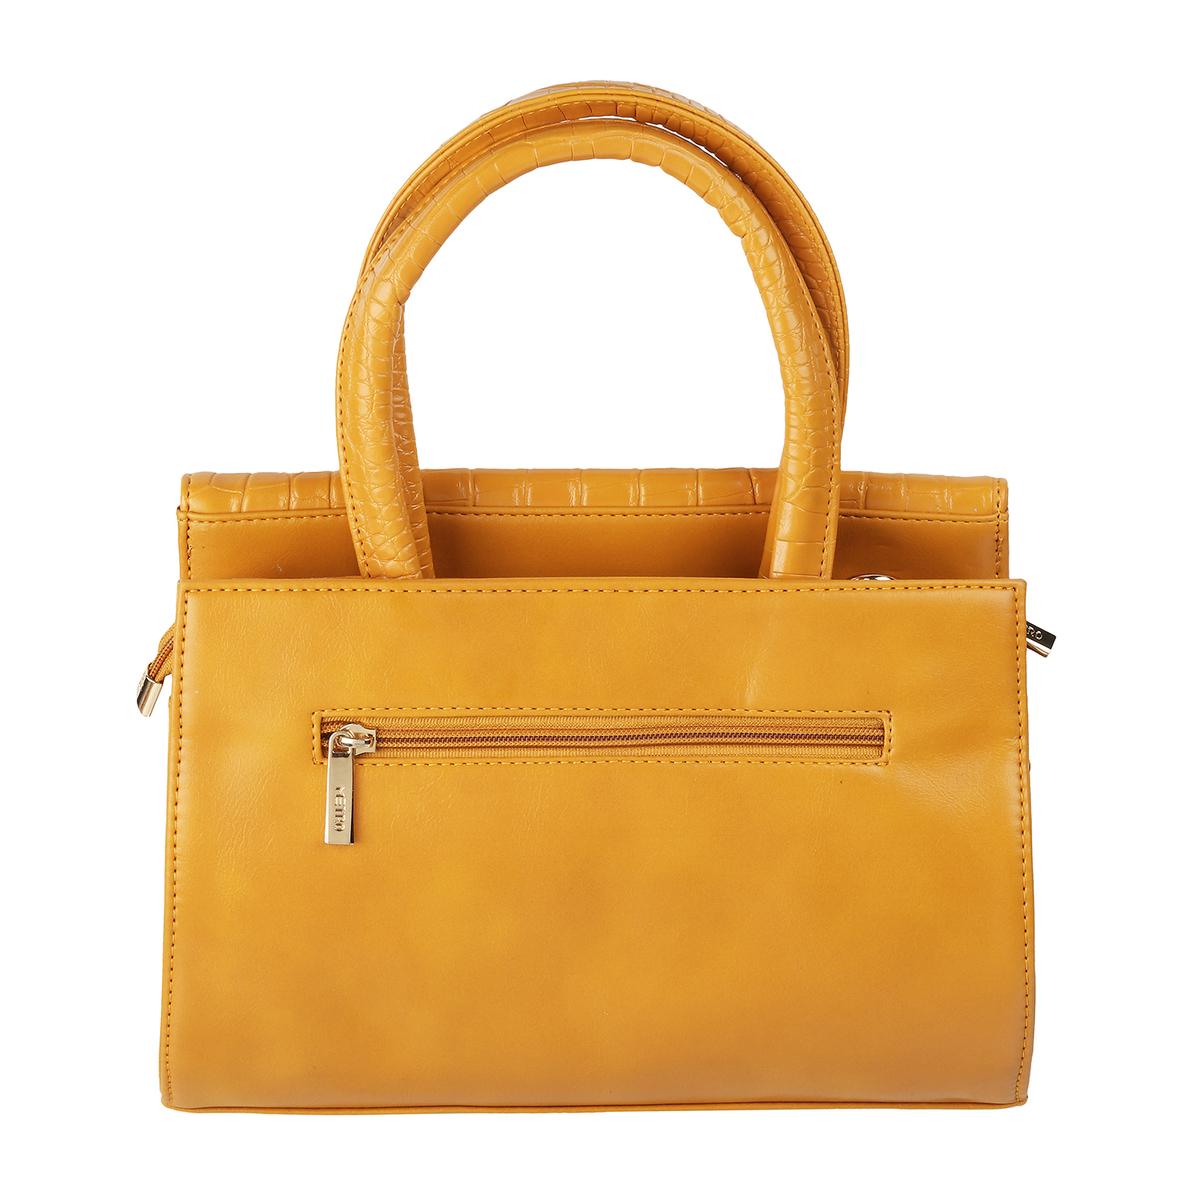 B Makowsky Mustard Yellow Leather Handbag Purse Large Bag Soft Leather  15x10x7 | eBay